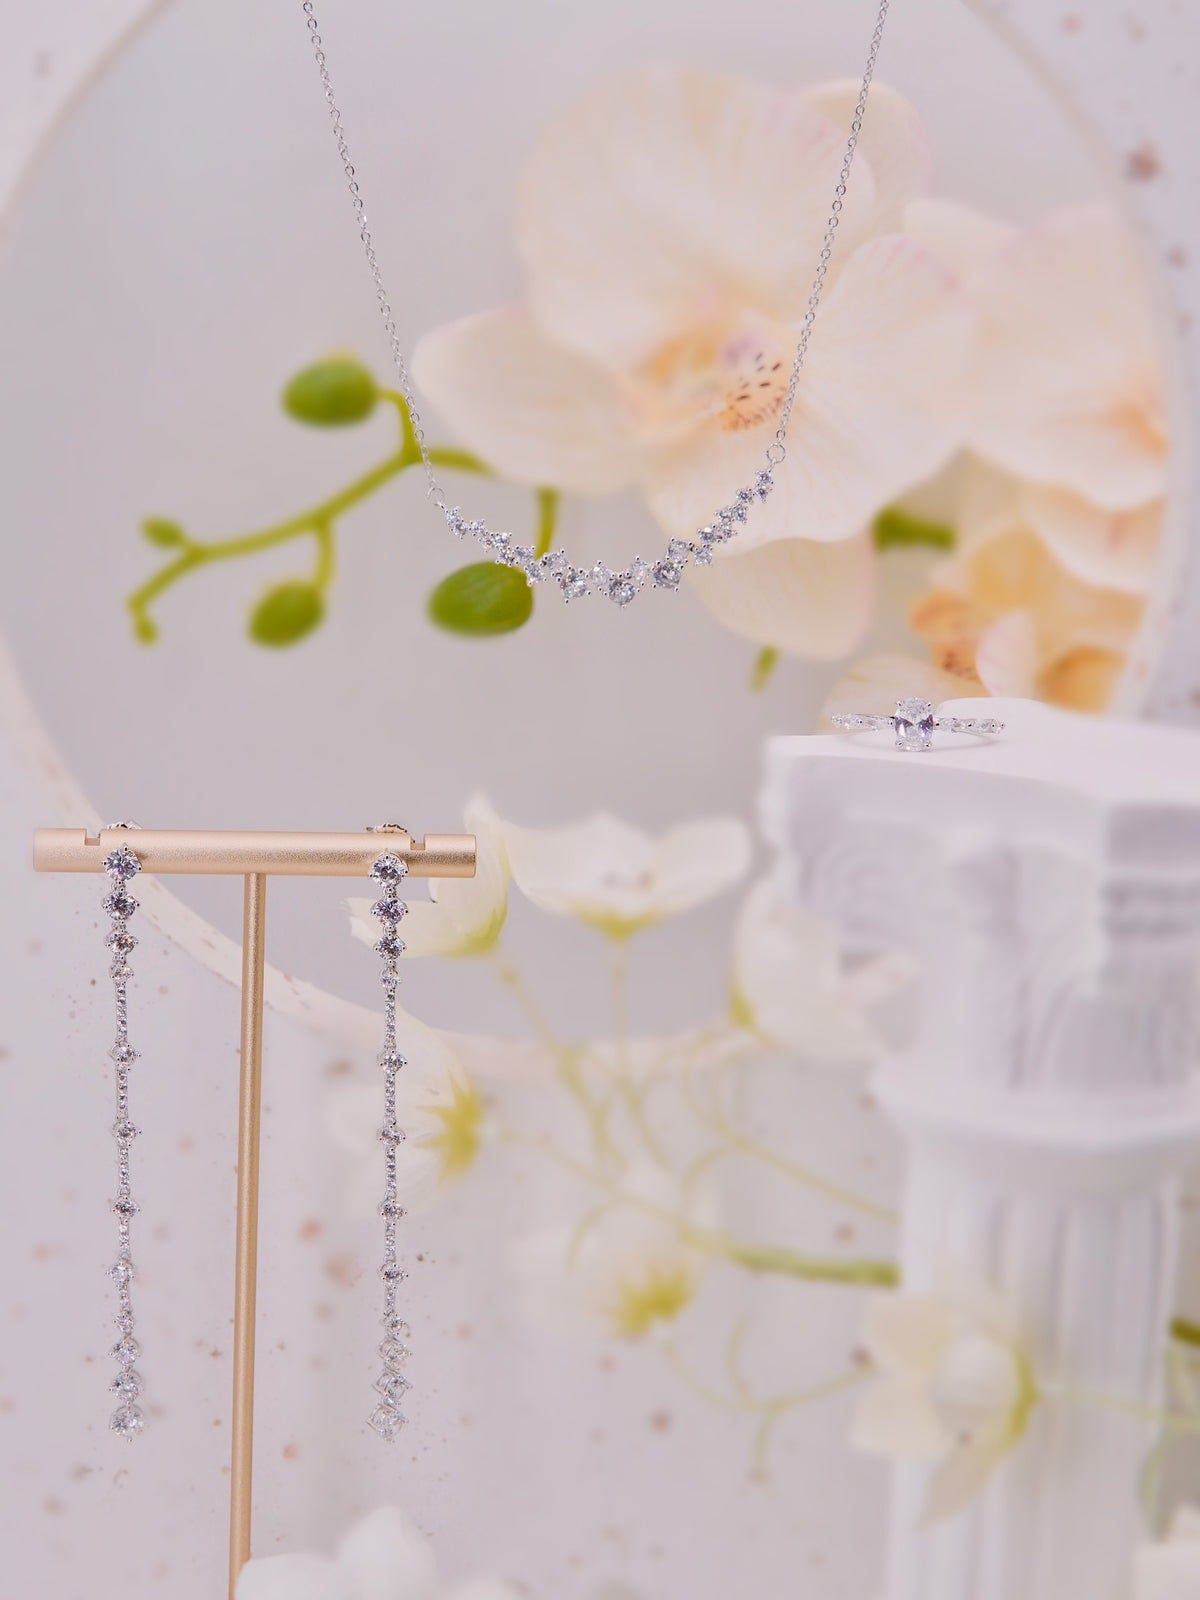 LAFIT· Irresistible Beauty - Necklace 貴氣獨特閃鑽頸鏈